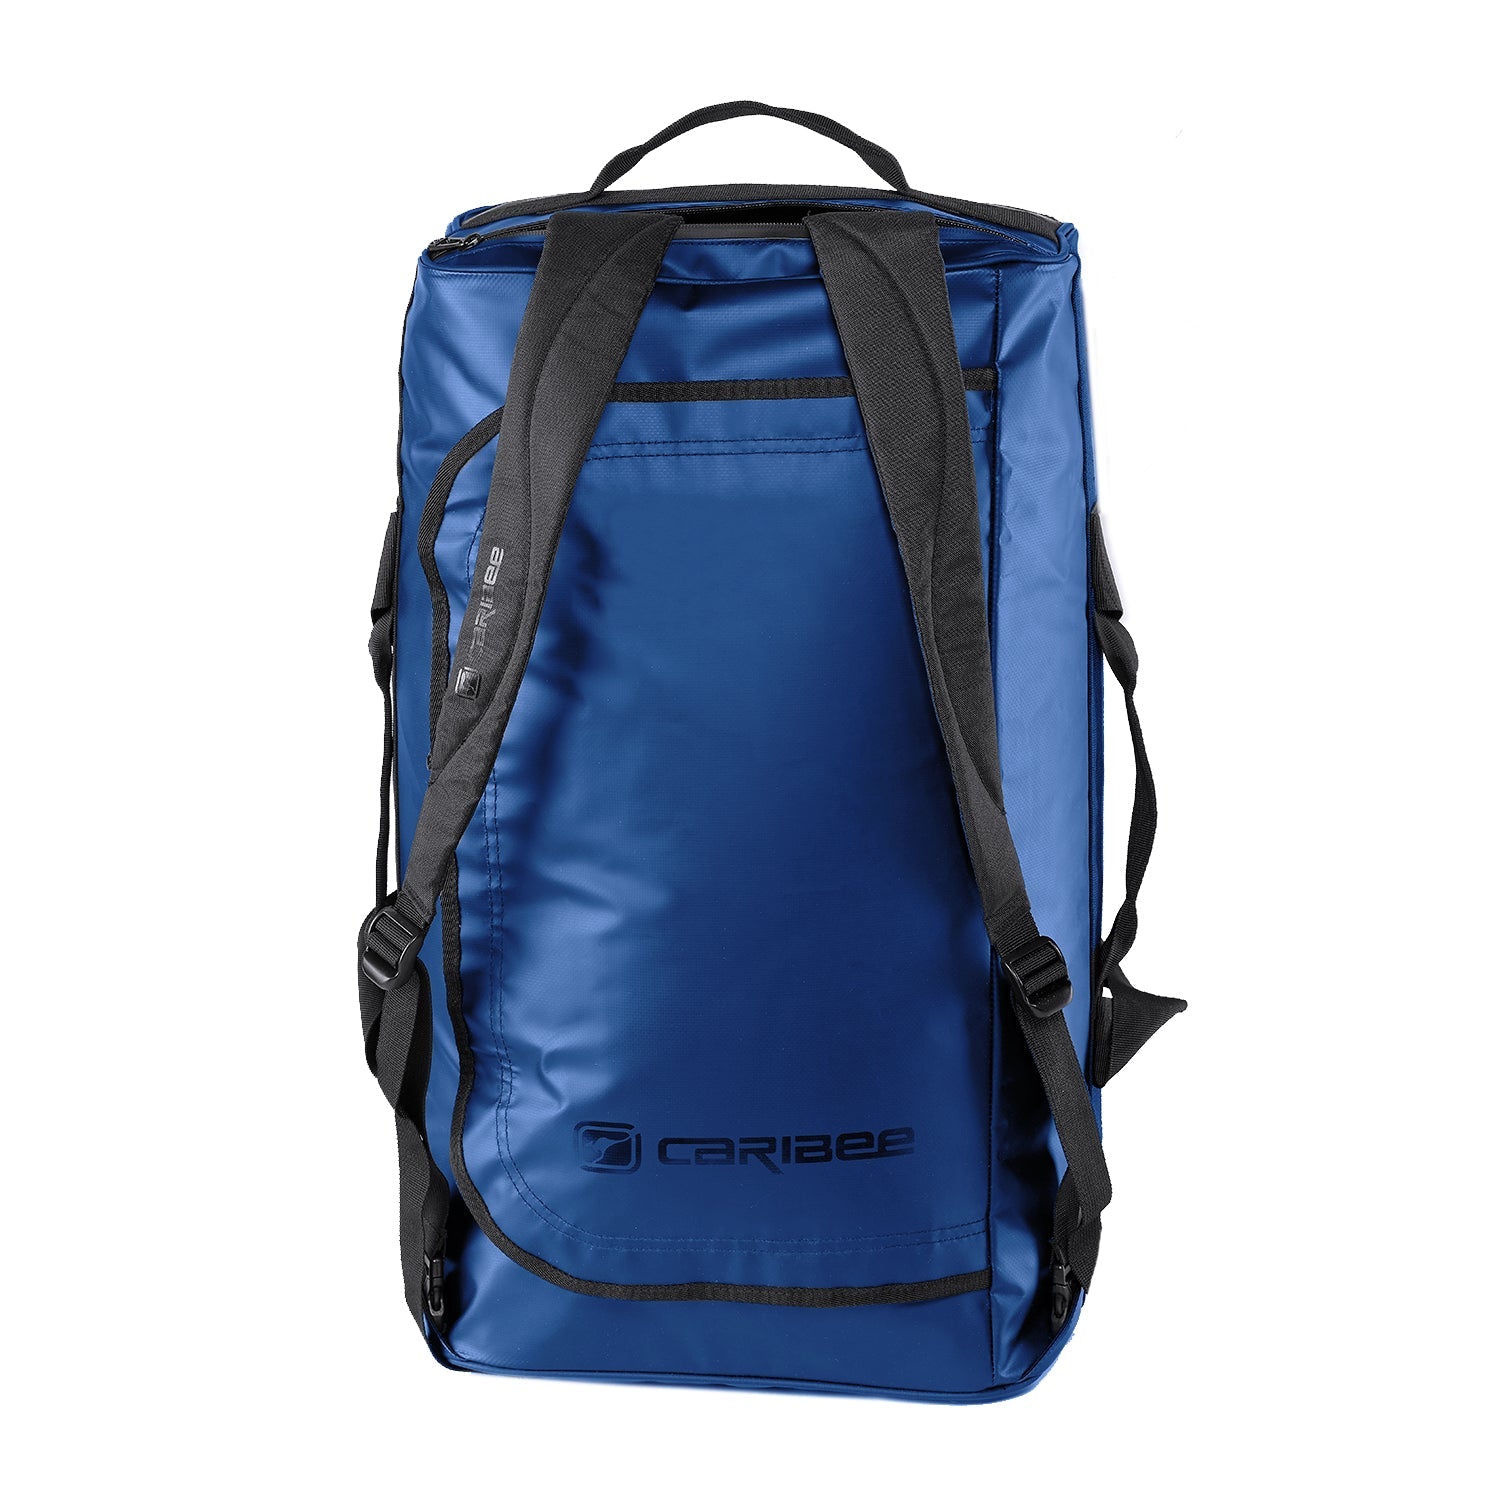 Caribee - Titan 50L Gear bag w Backpack straps - Blue-1